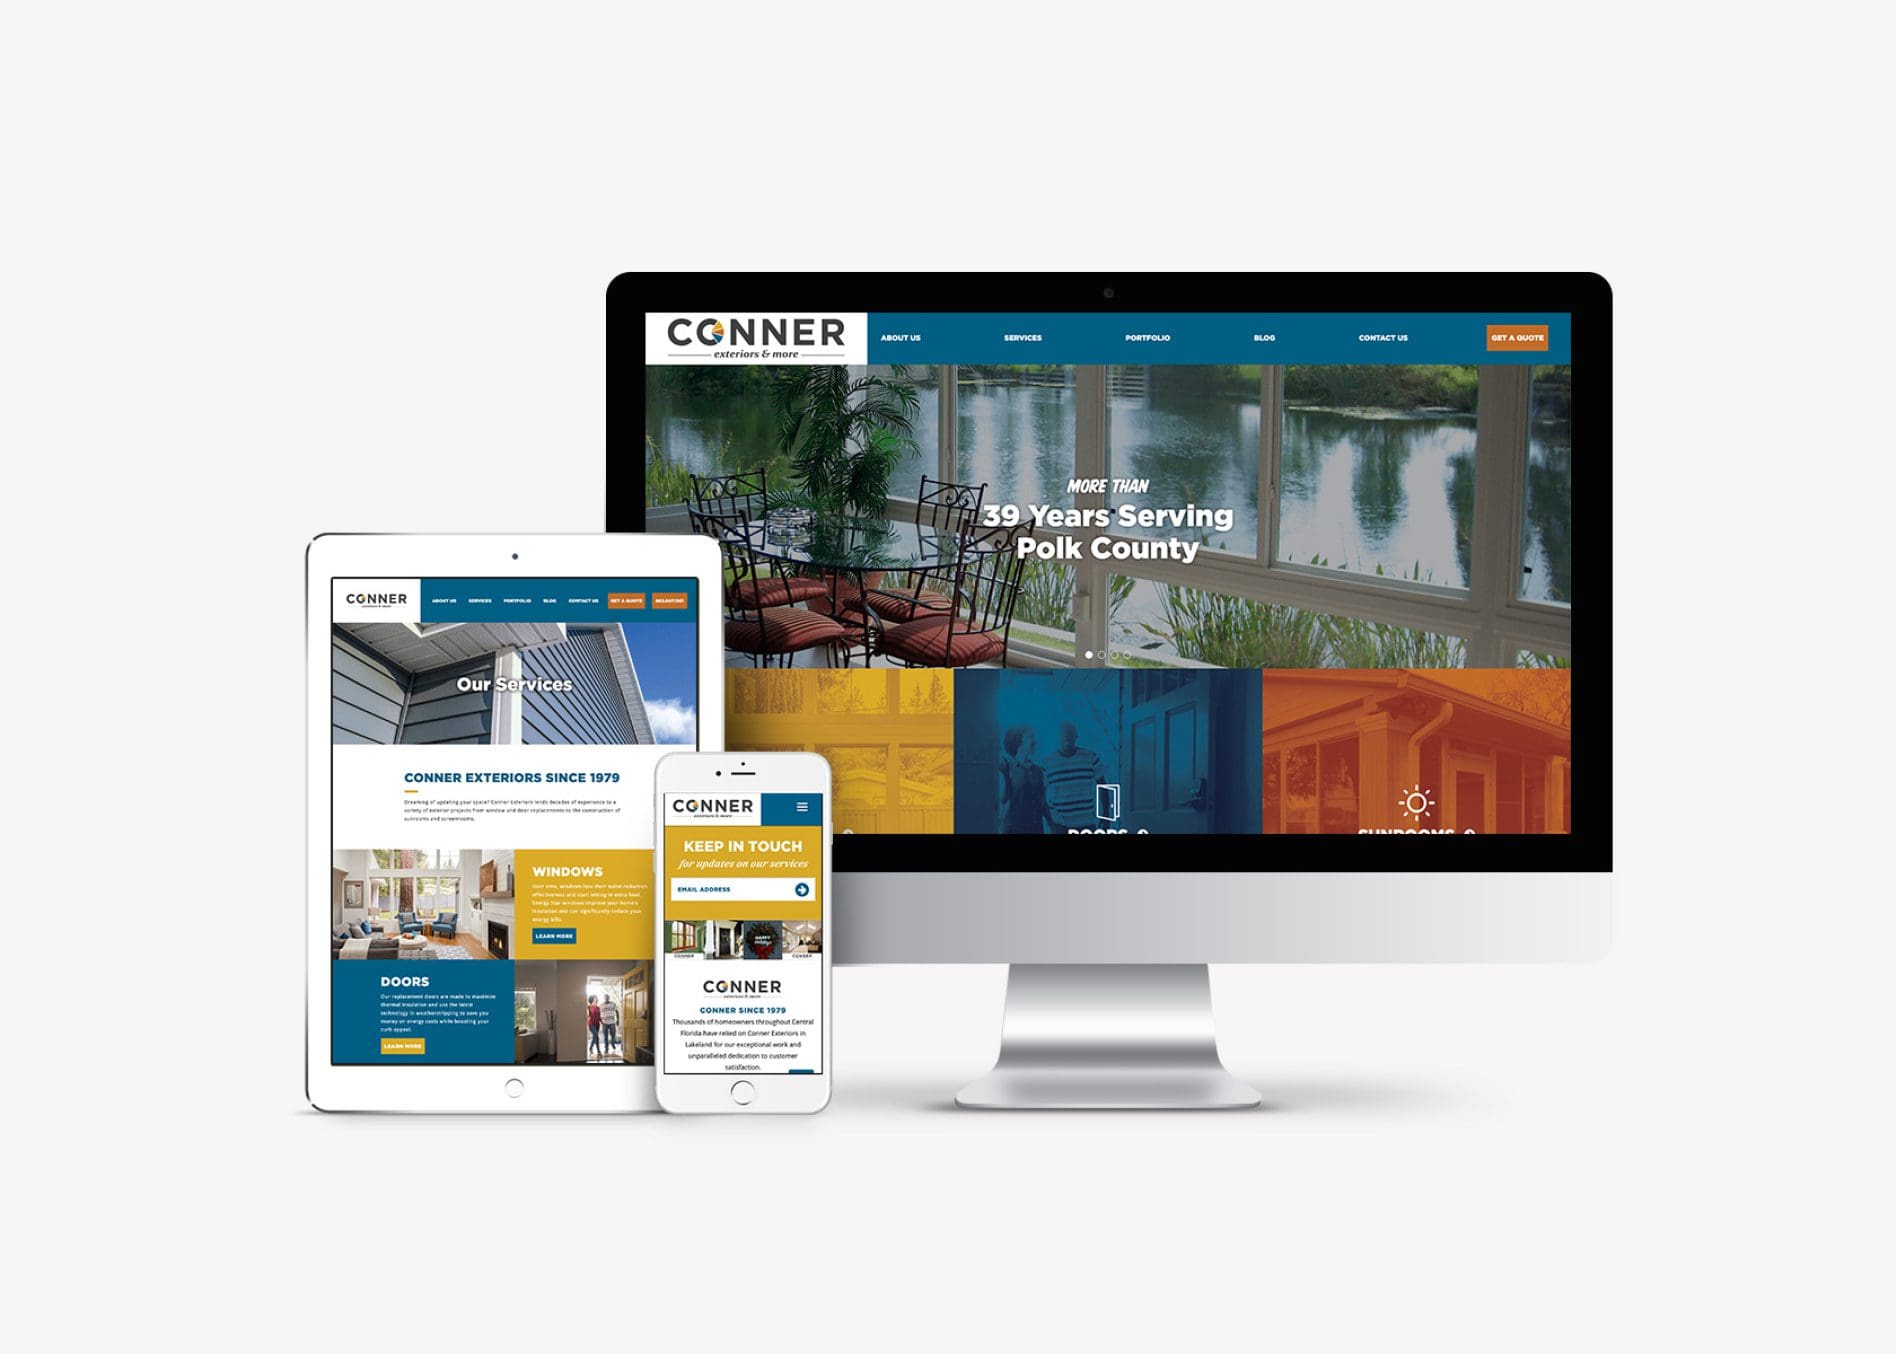 home improvement website design